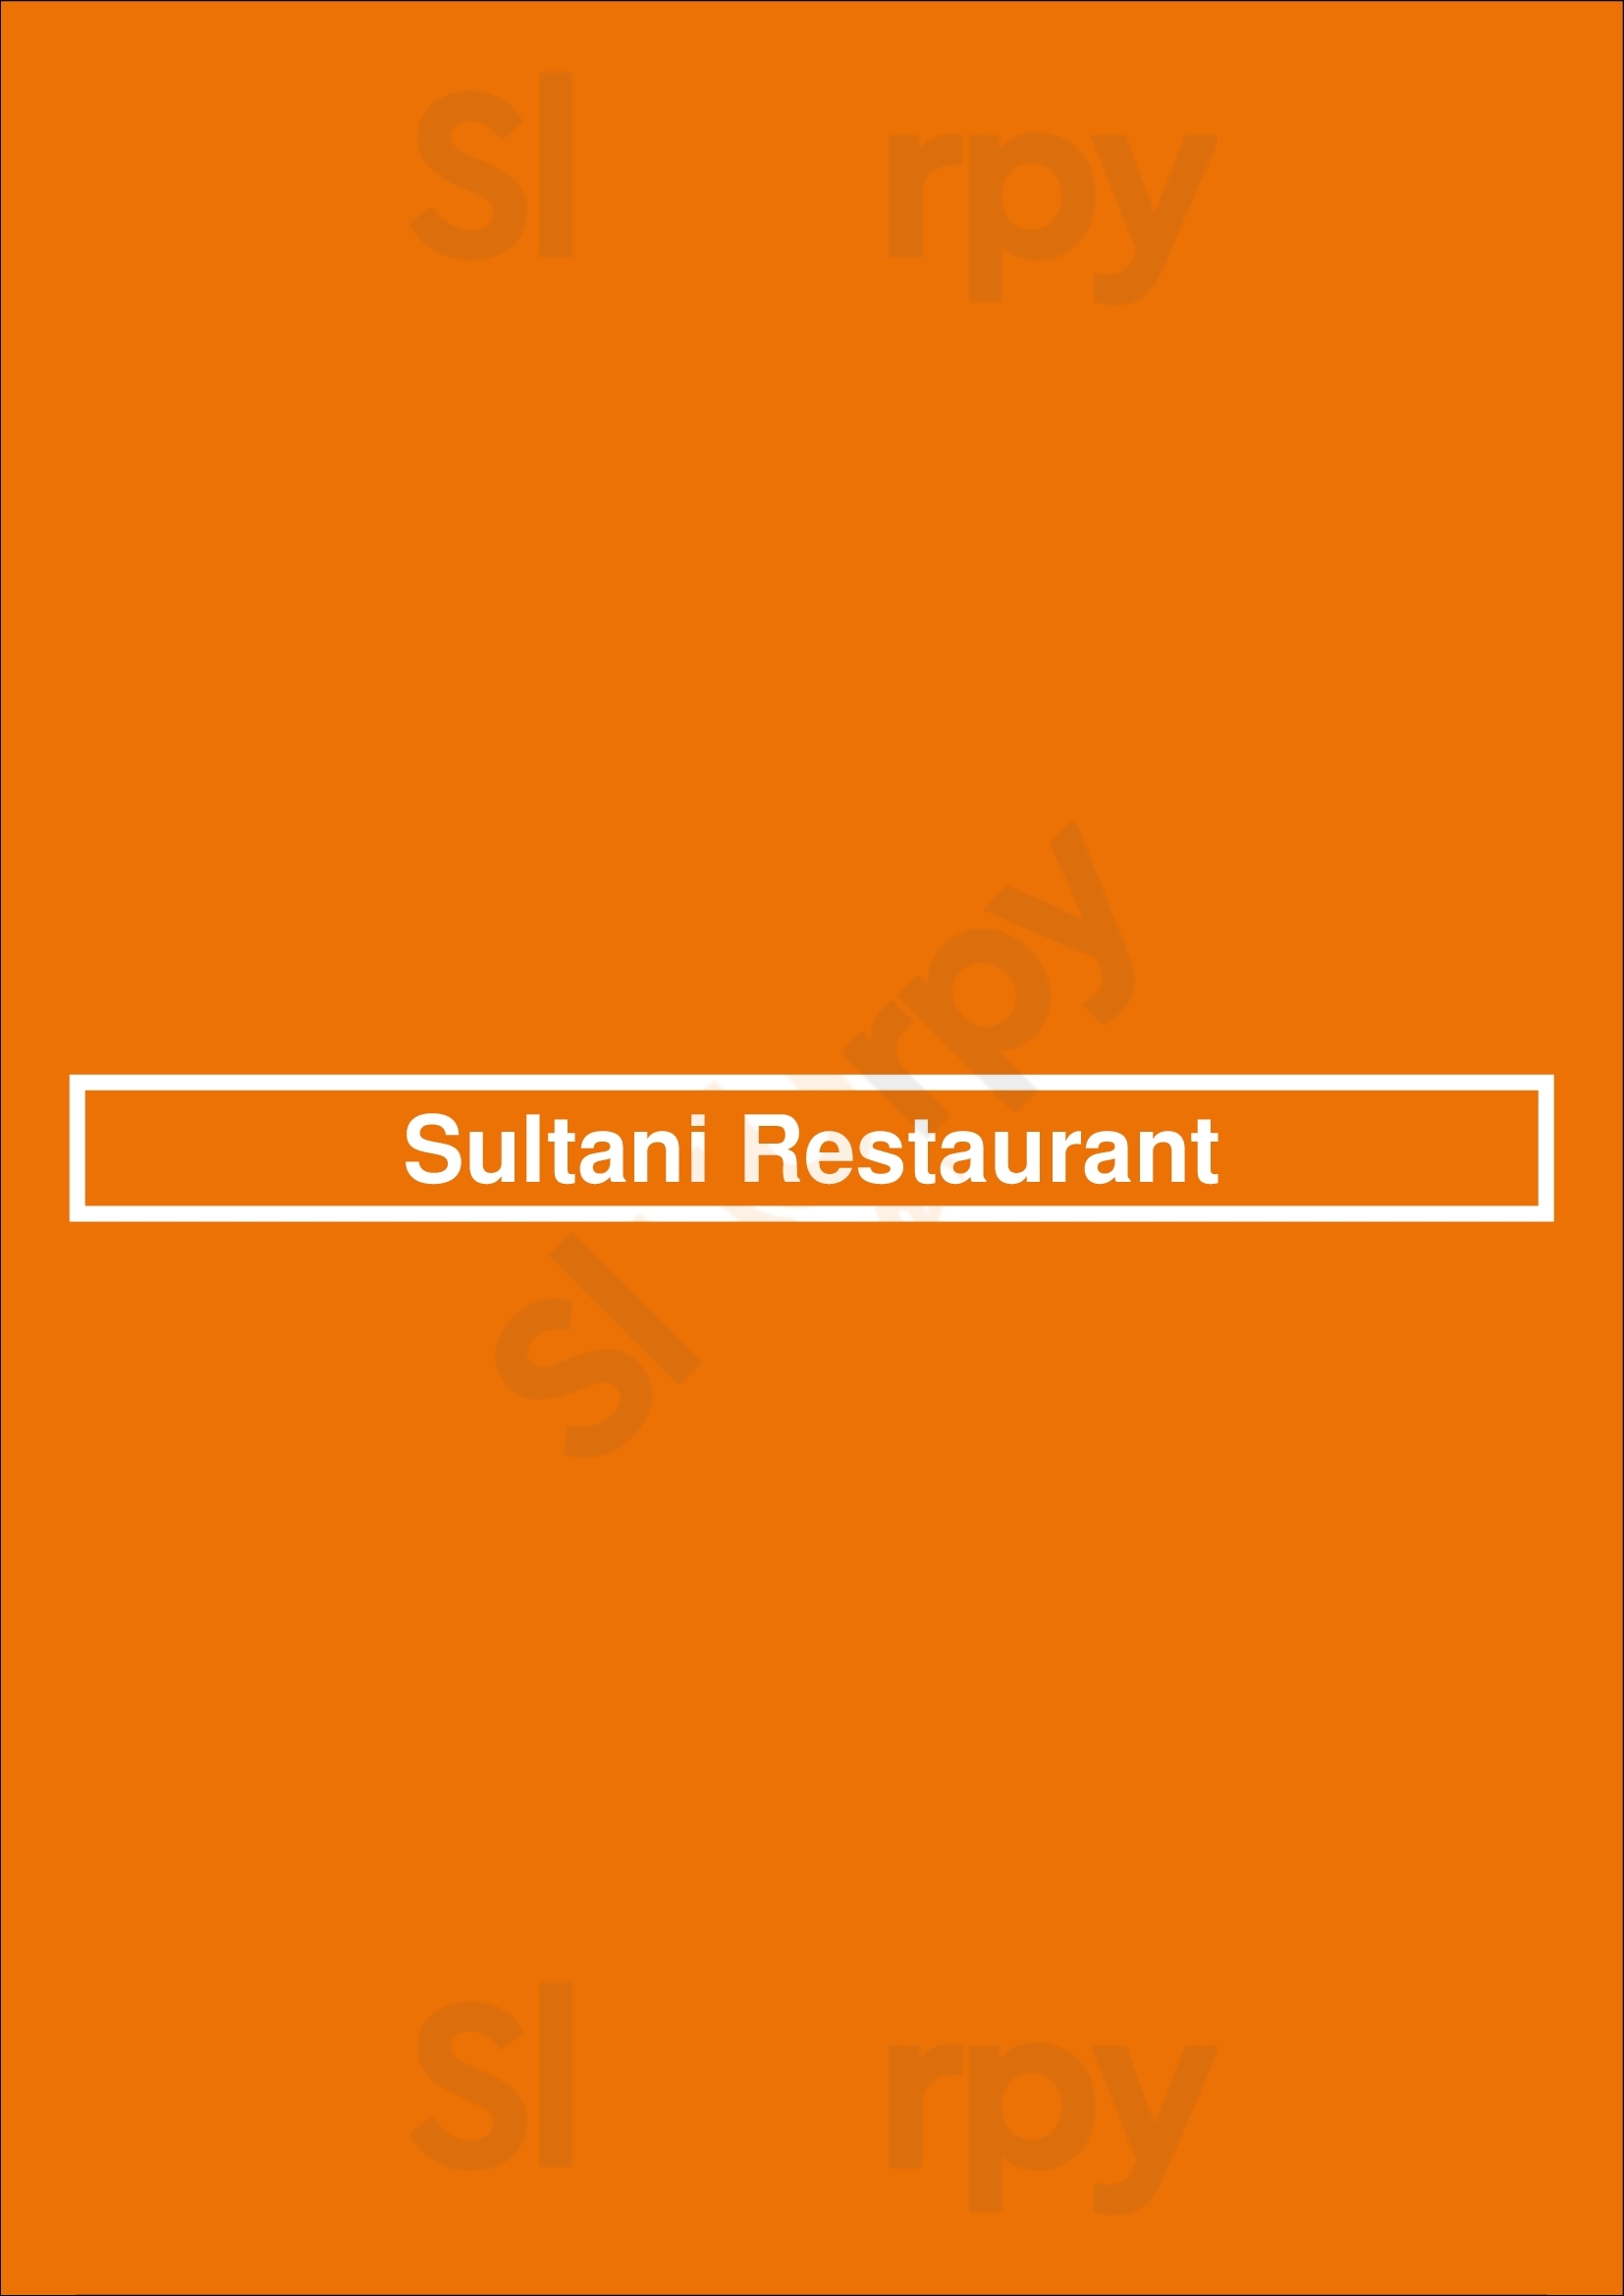 Sultani Restaurant Los Angeles Menu - 1